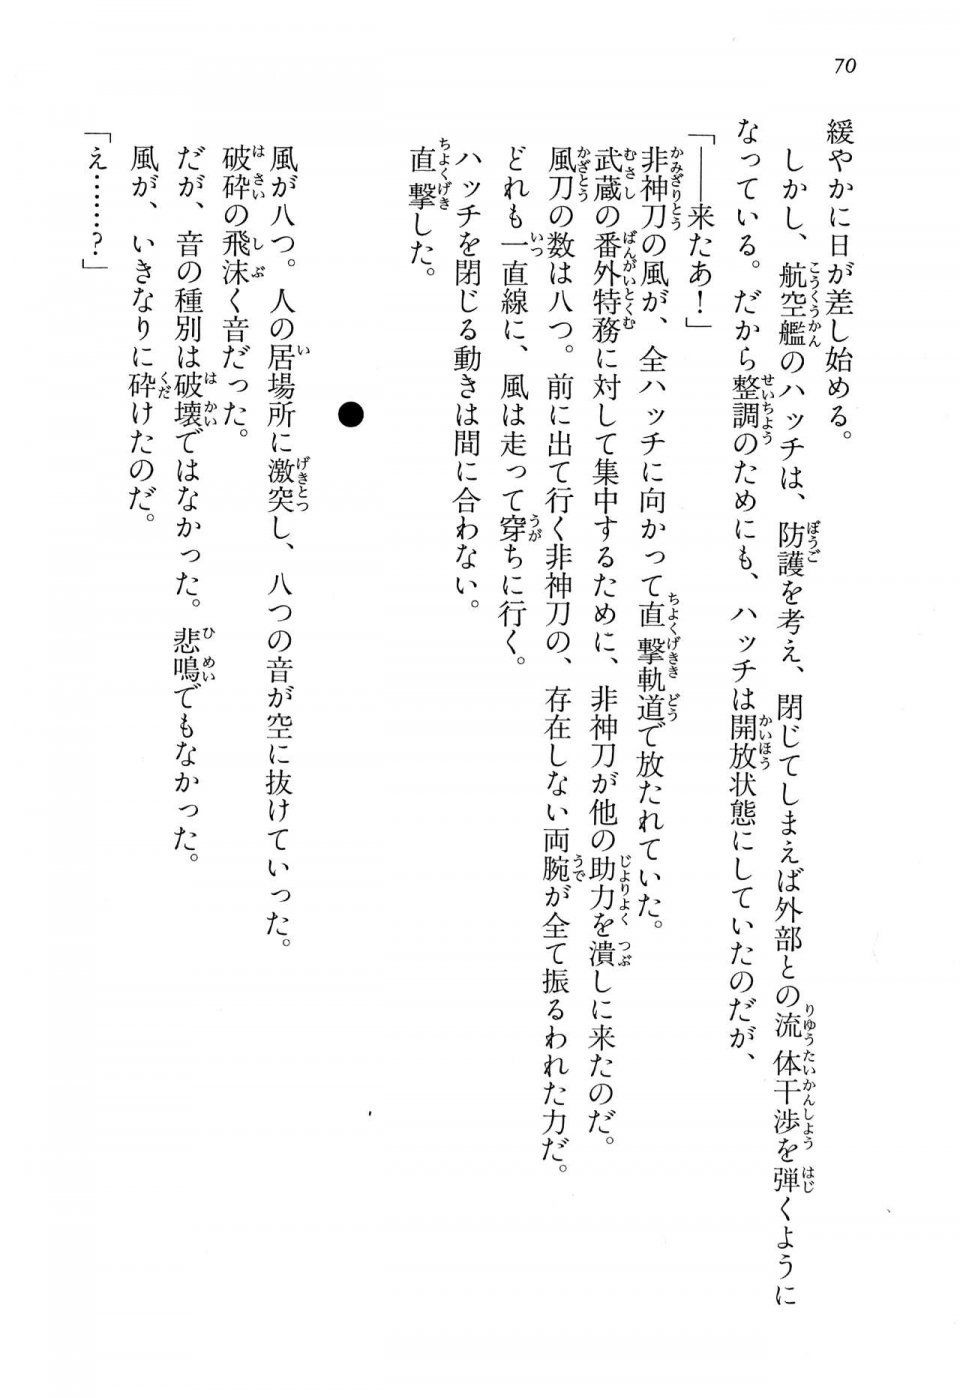 Kyoukai Senjou no Horizon BD Special Mininovel Vol 1(1A) - Photo #74